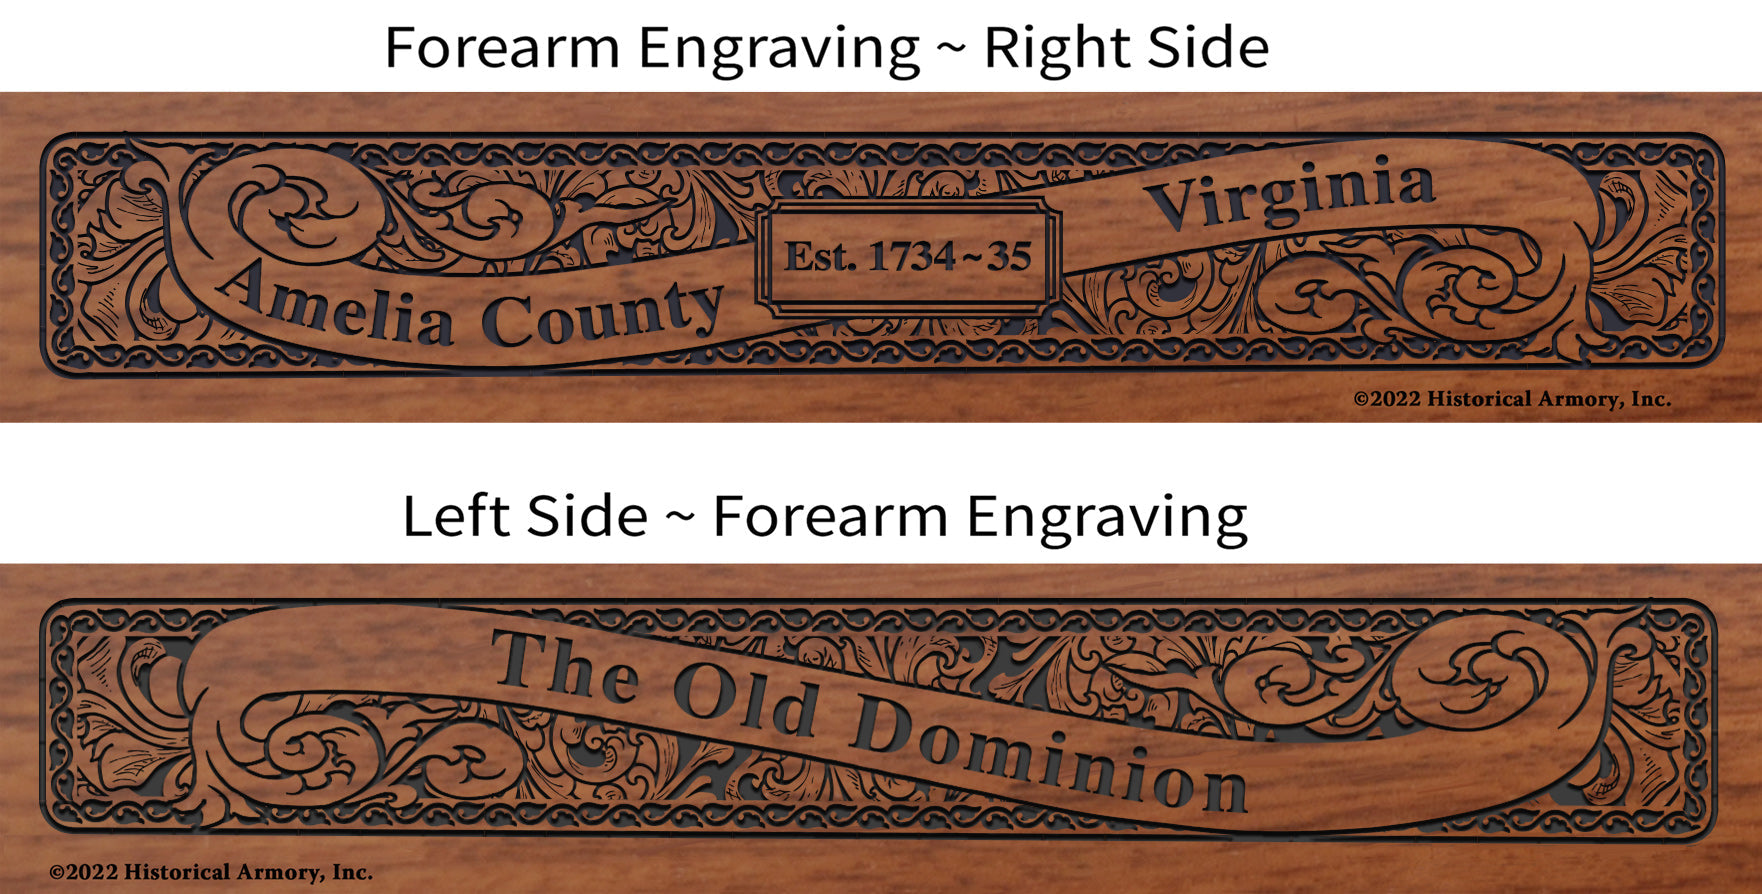 Amelia County Virginia Engraved Rifle Forearm